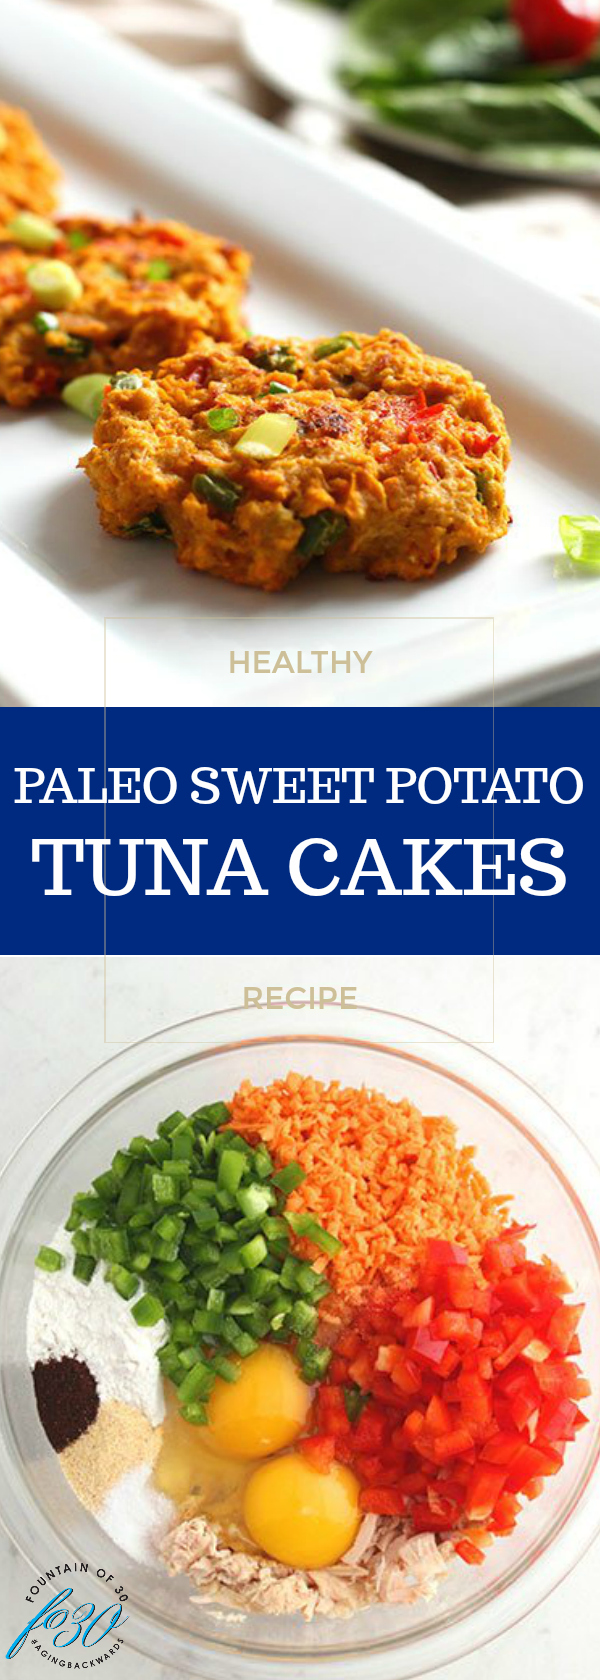 paleo sweet potato tuna cakes recipe